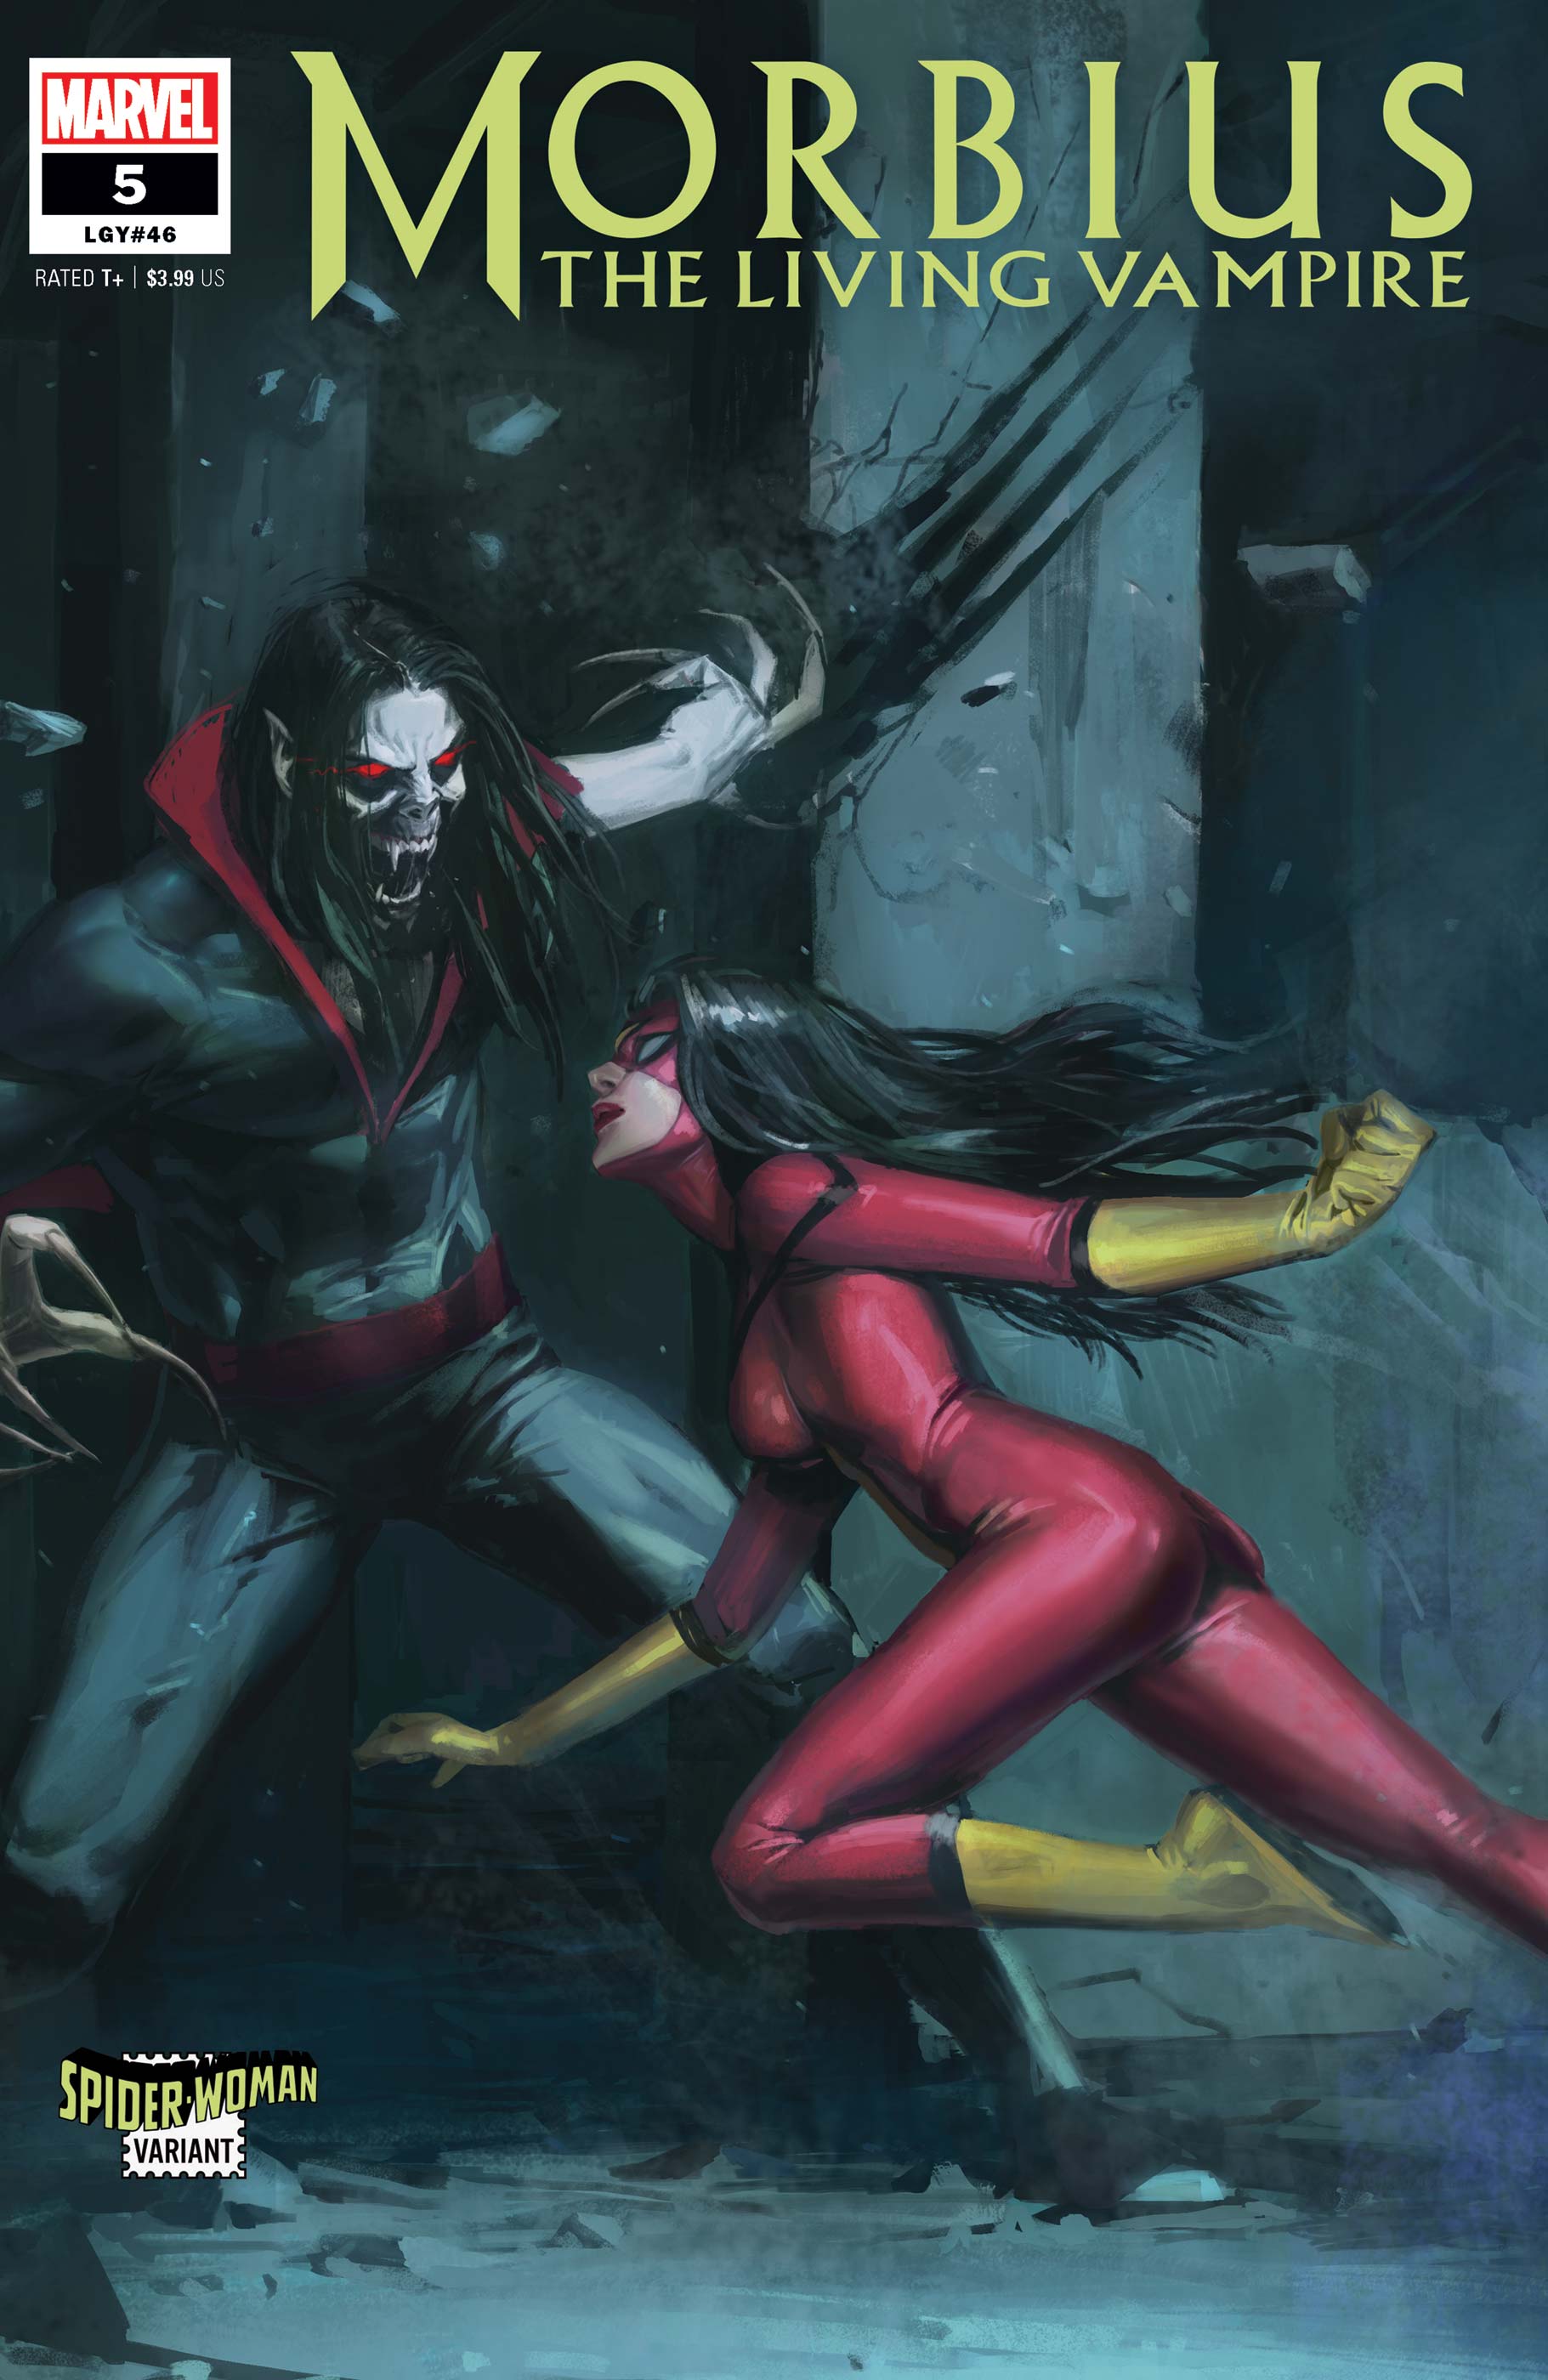 Morbius #5 Pyeong Jun Park Spider-Woman Variant